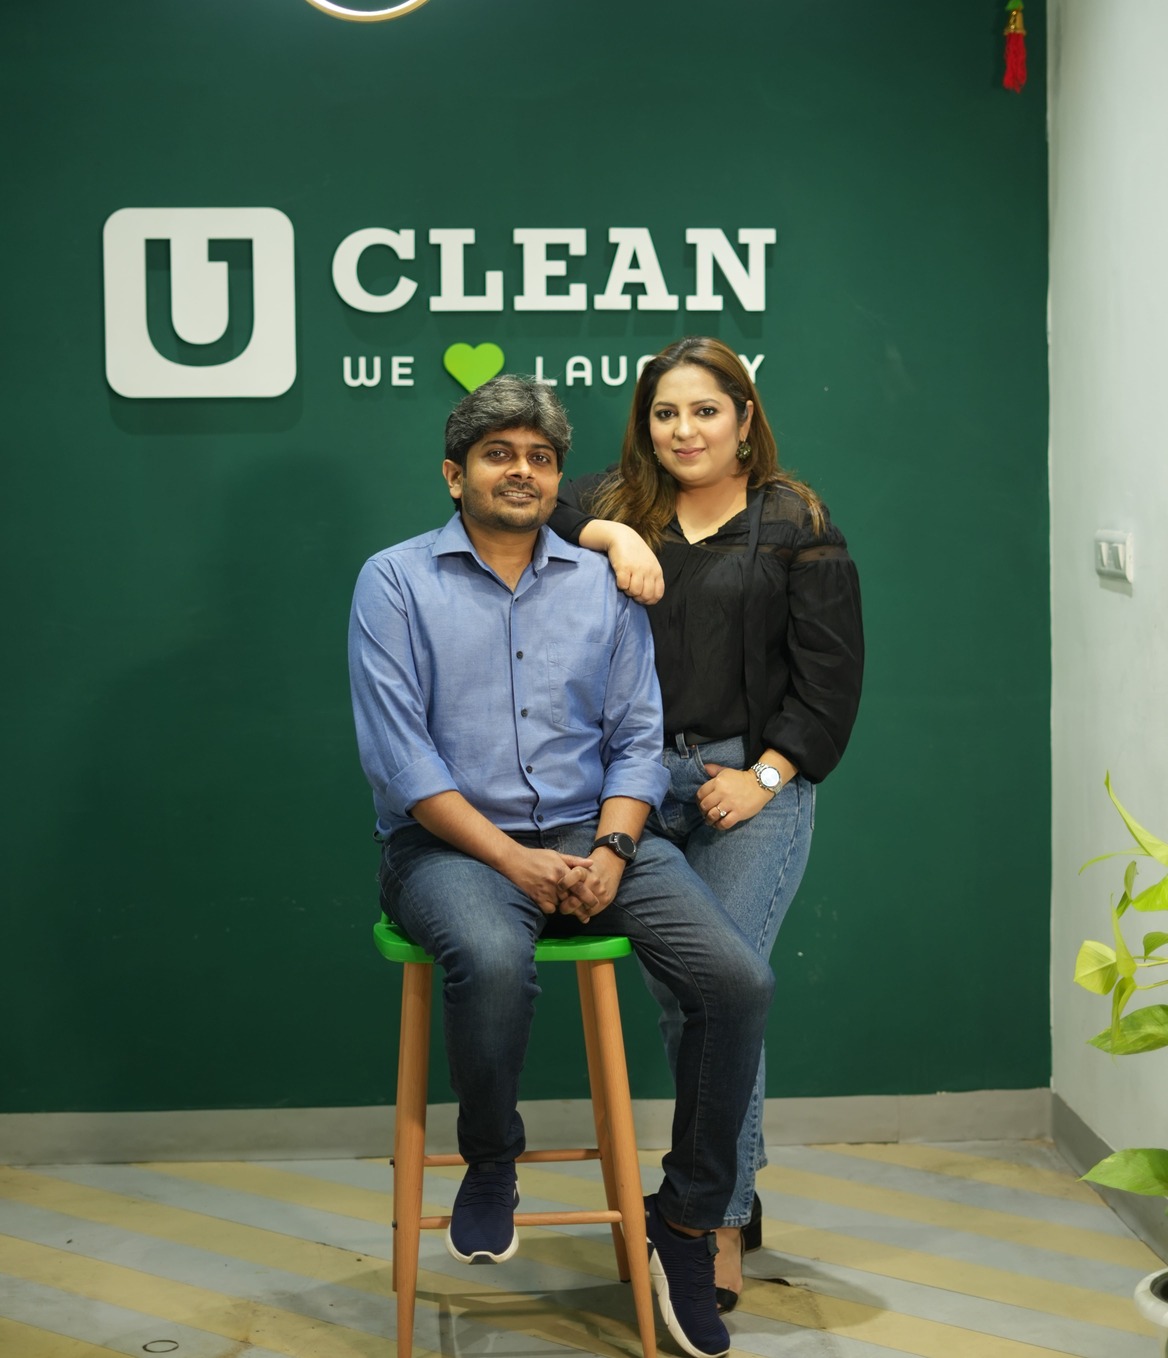 Arunabh and Gunjan started Uclean in 2017